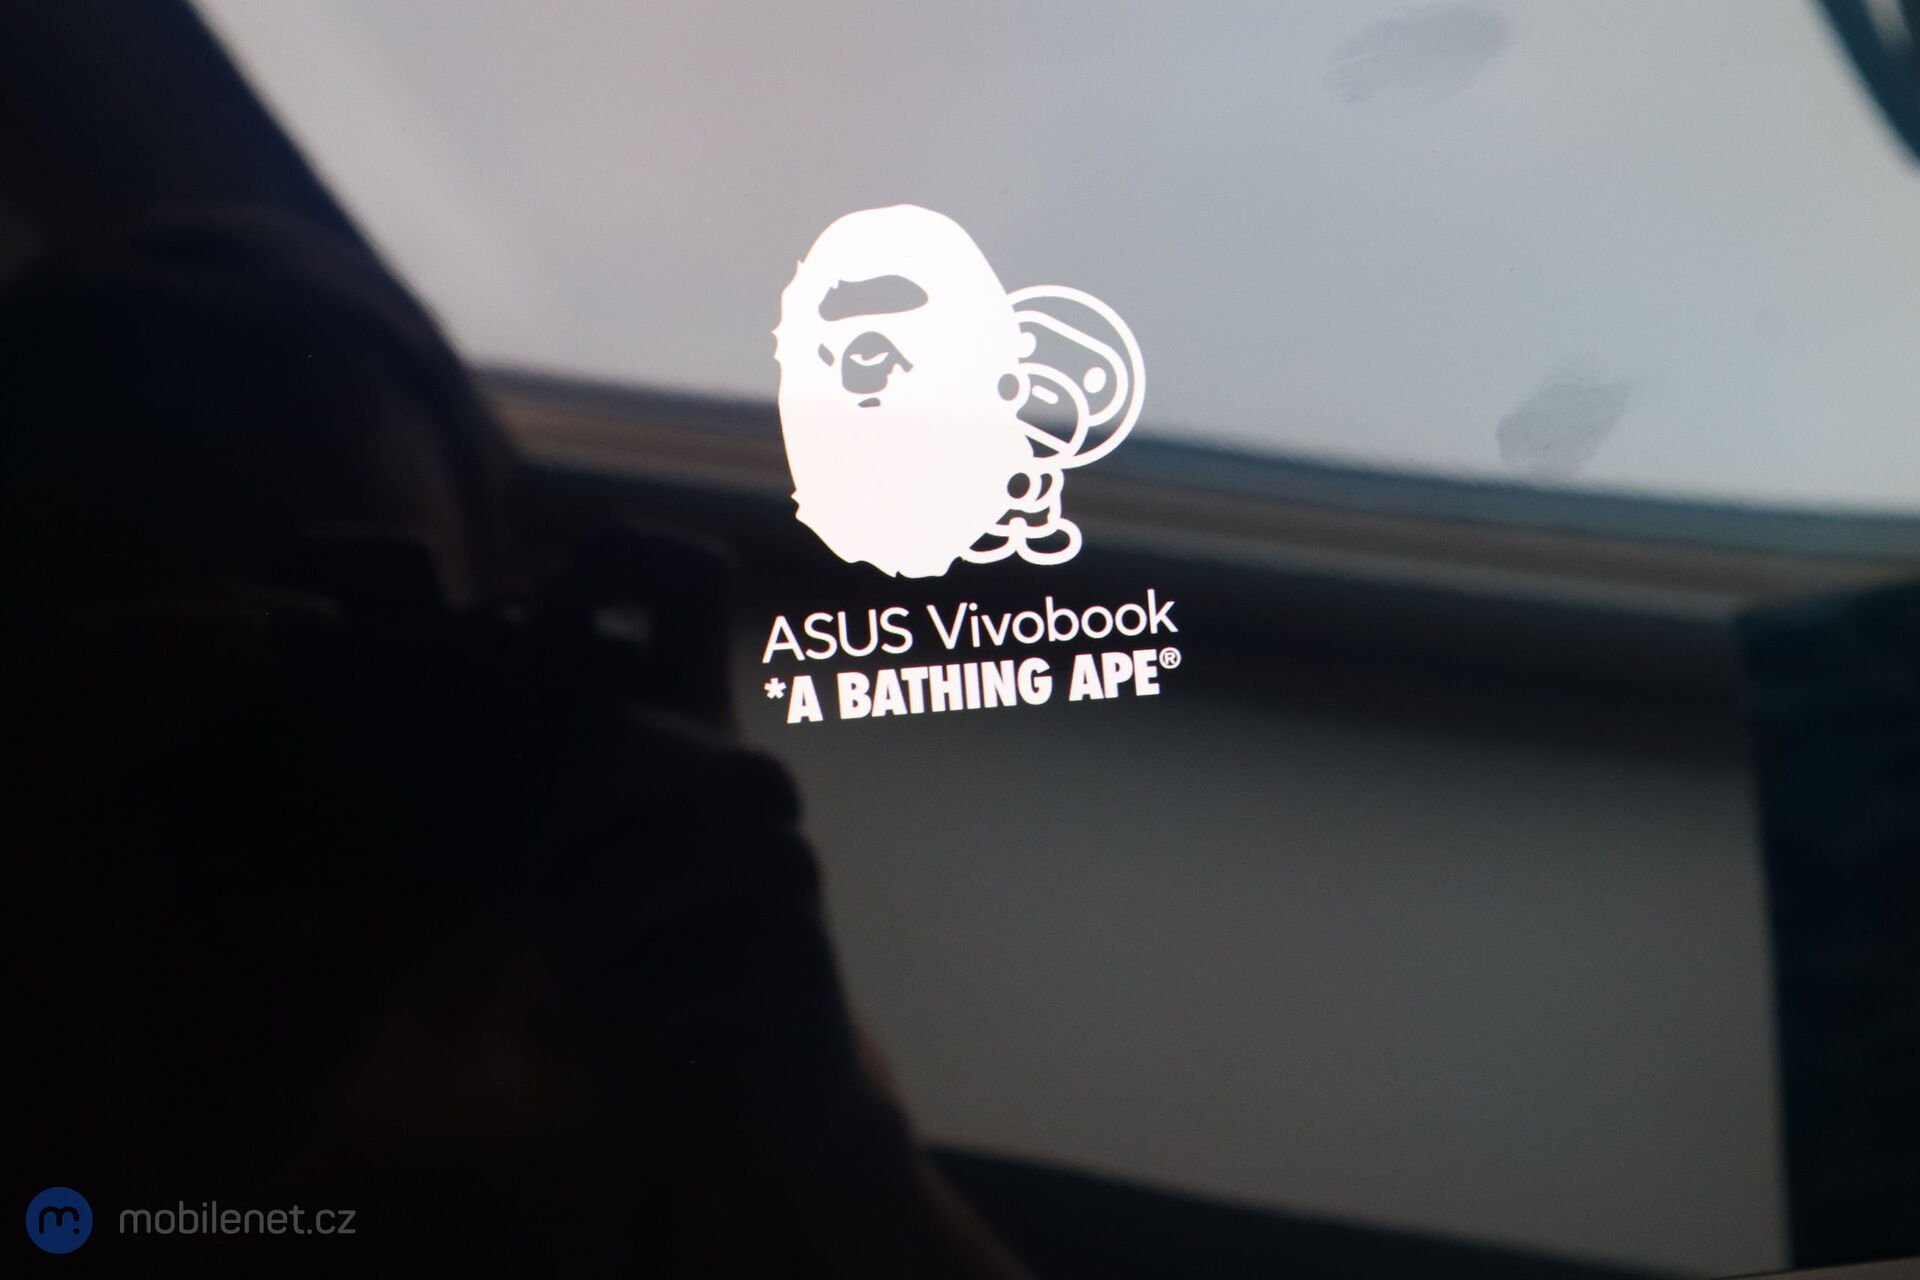 ASUS Vivobook S 15 OLED BAPE Edition